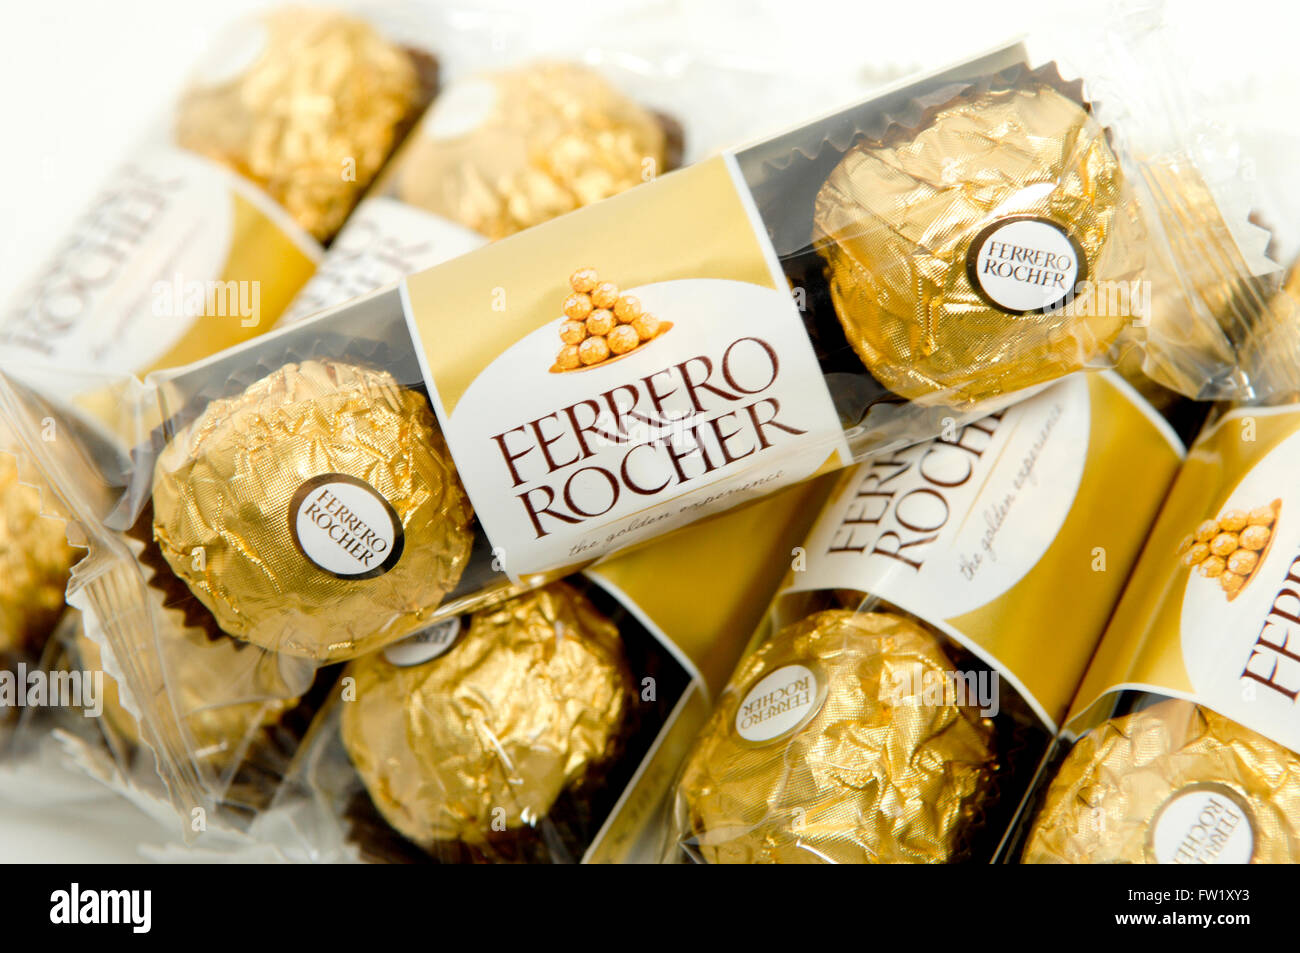 Ferrero Rocher is a premium, spherical chocolate sweet produced by the Italian chocolatier Ferrero SpA. Stock Photo